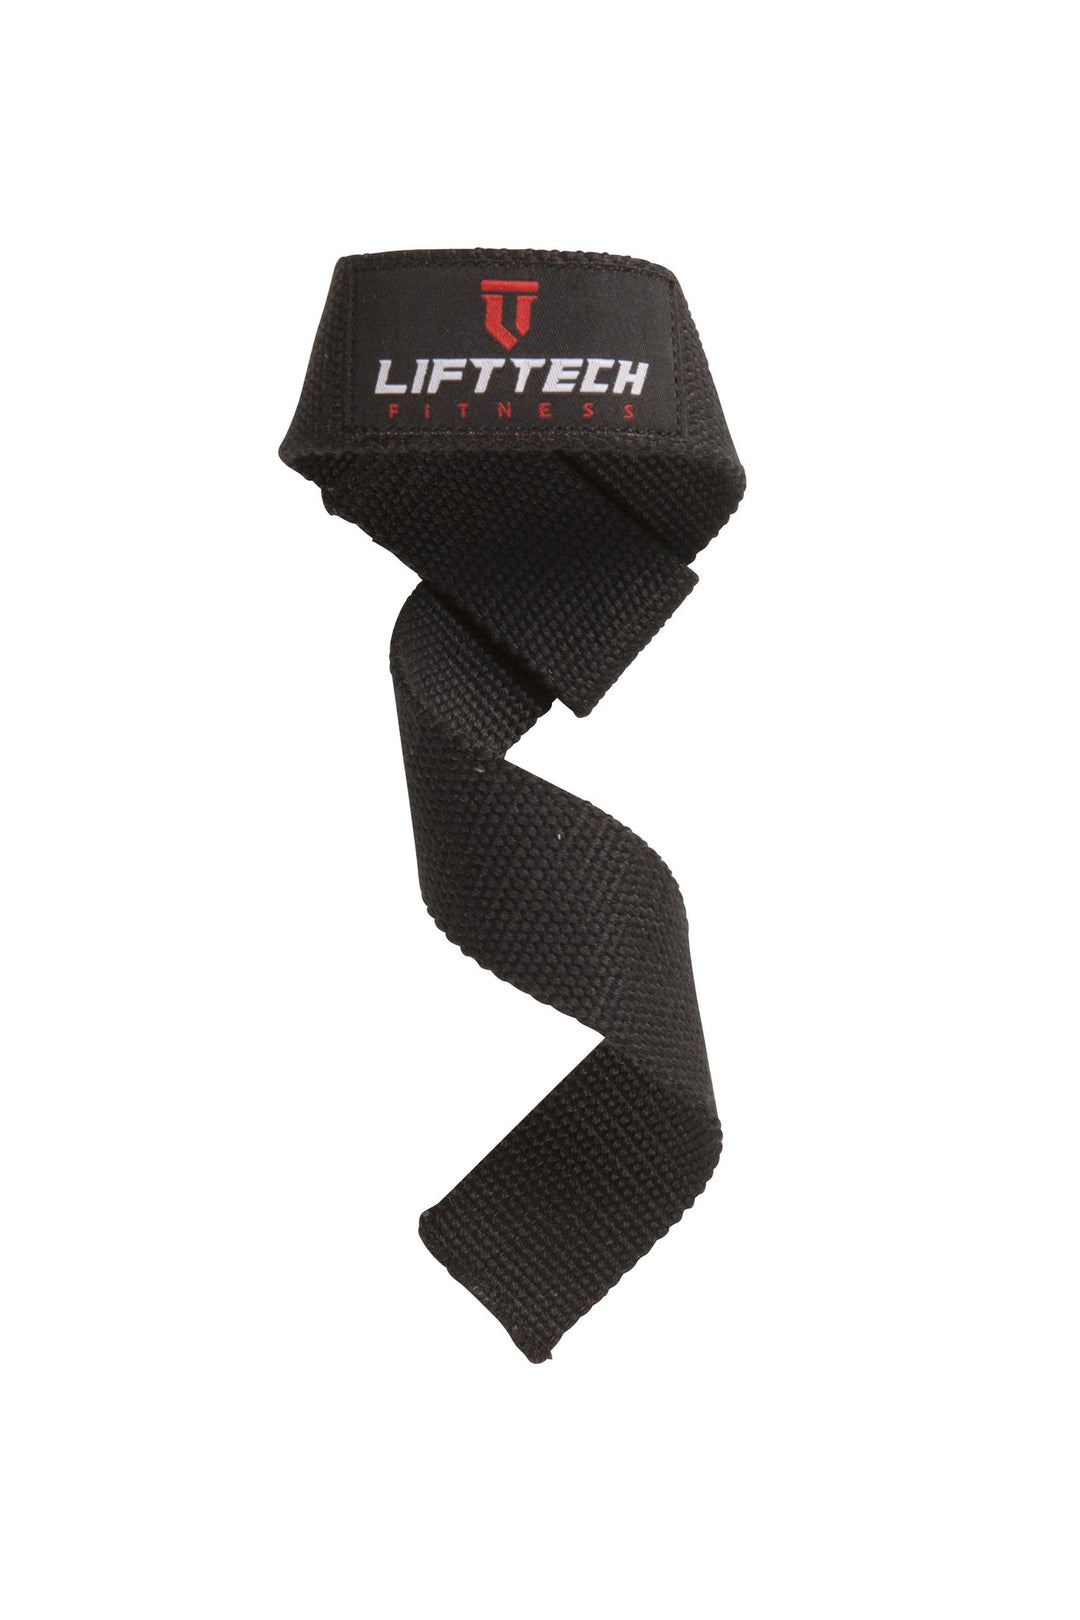 LiftTech 20" Lifting Straps